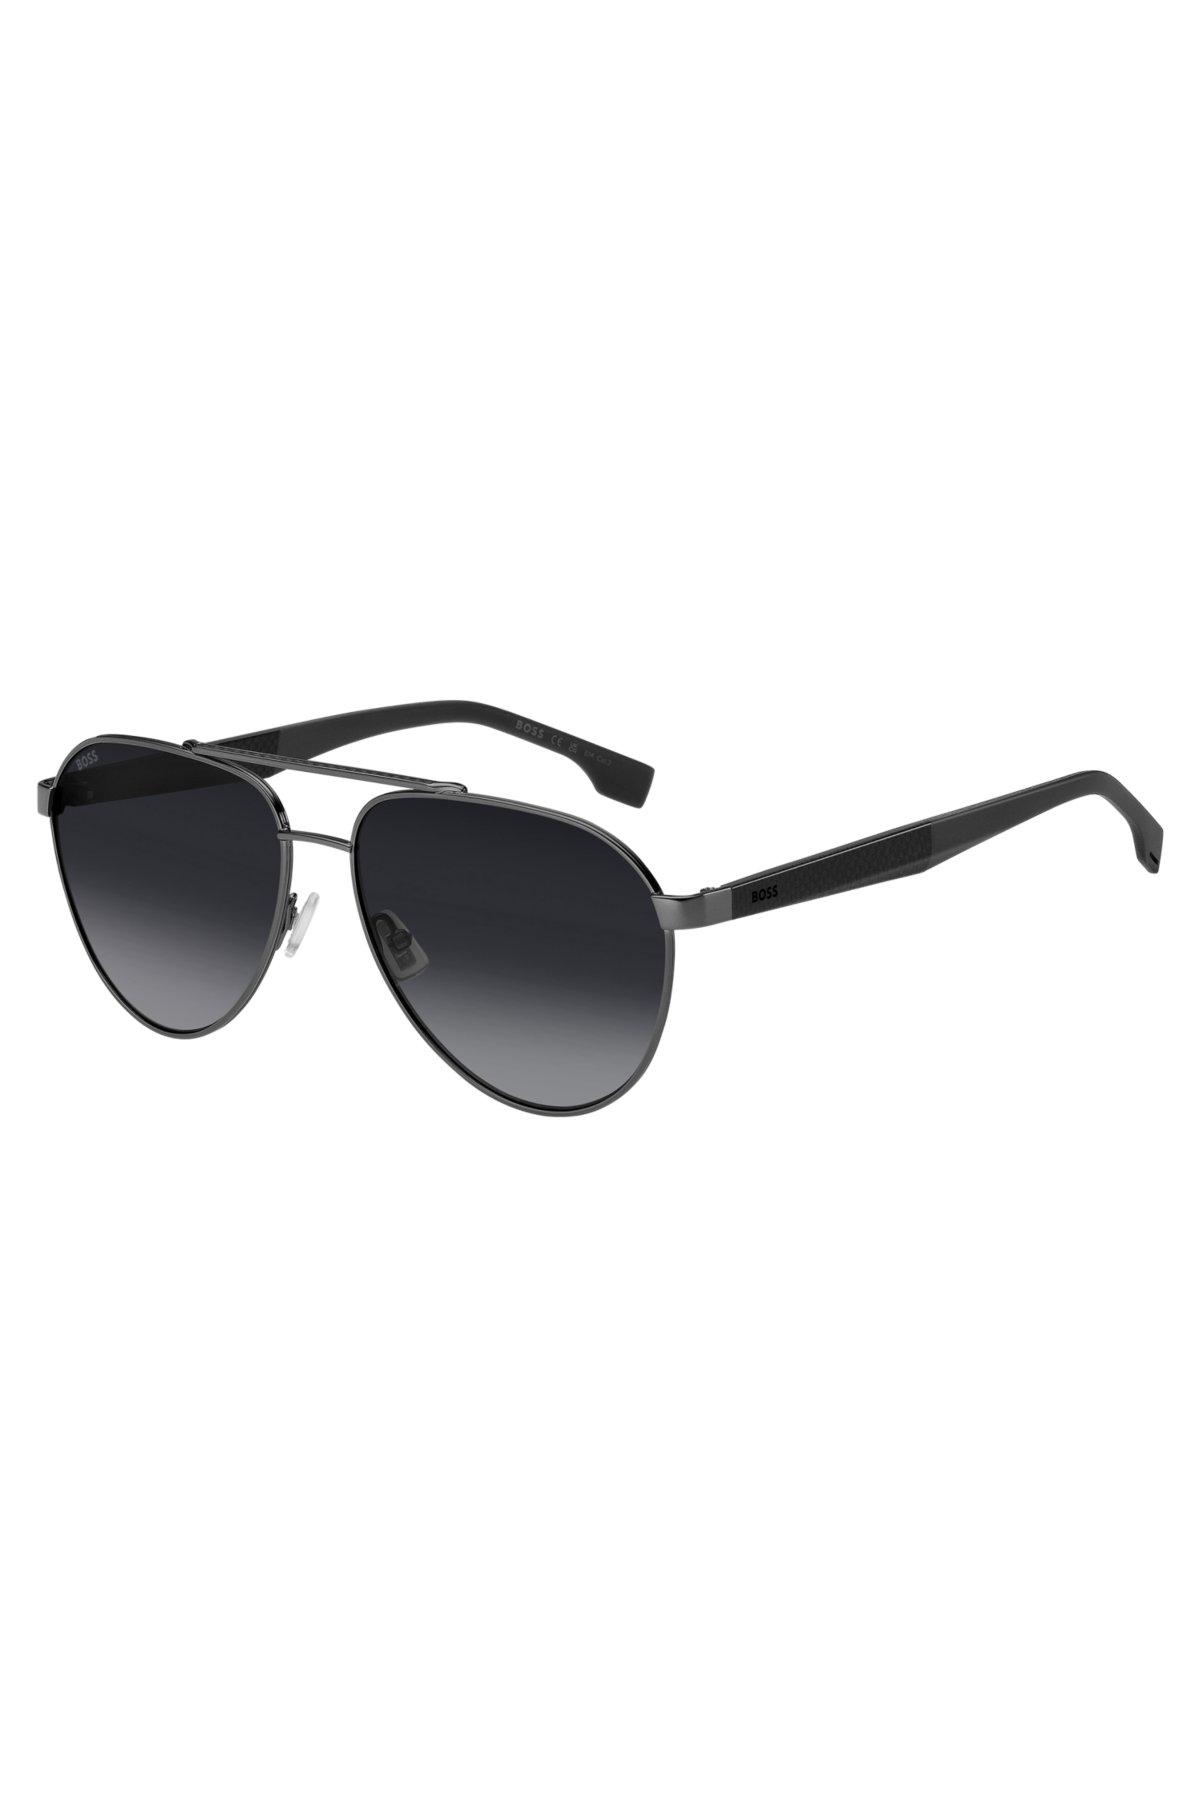 Double-bridge sunglasses with black-shaded lenses